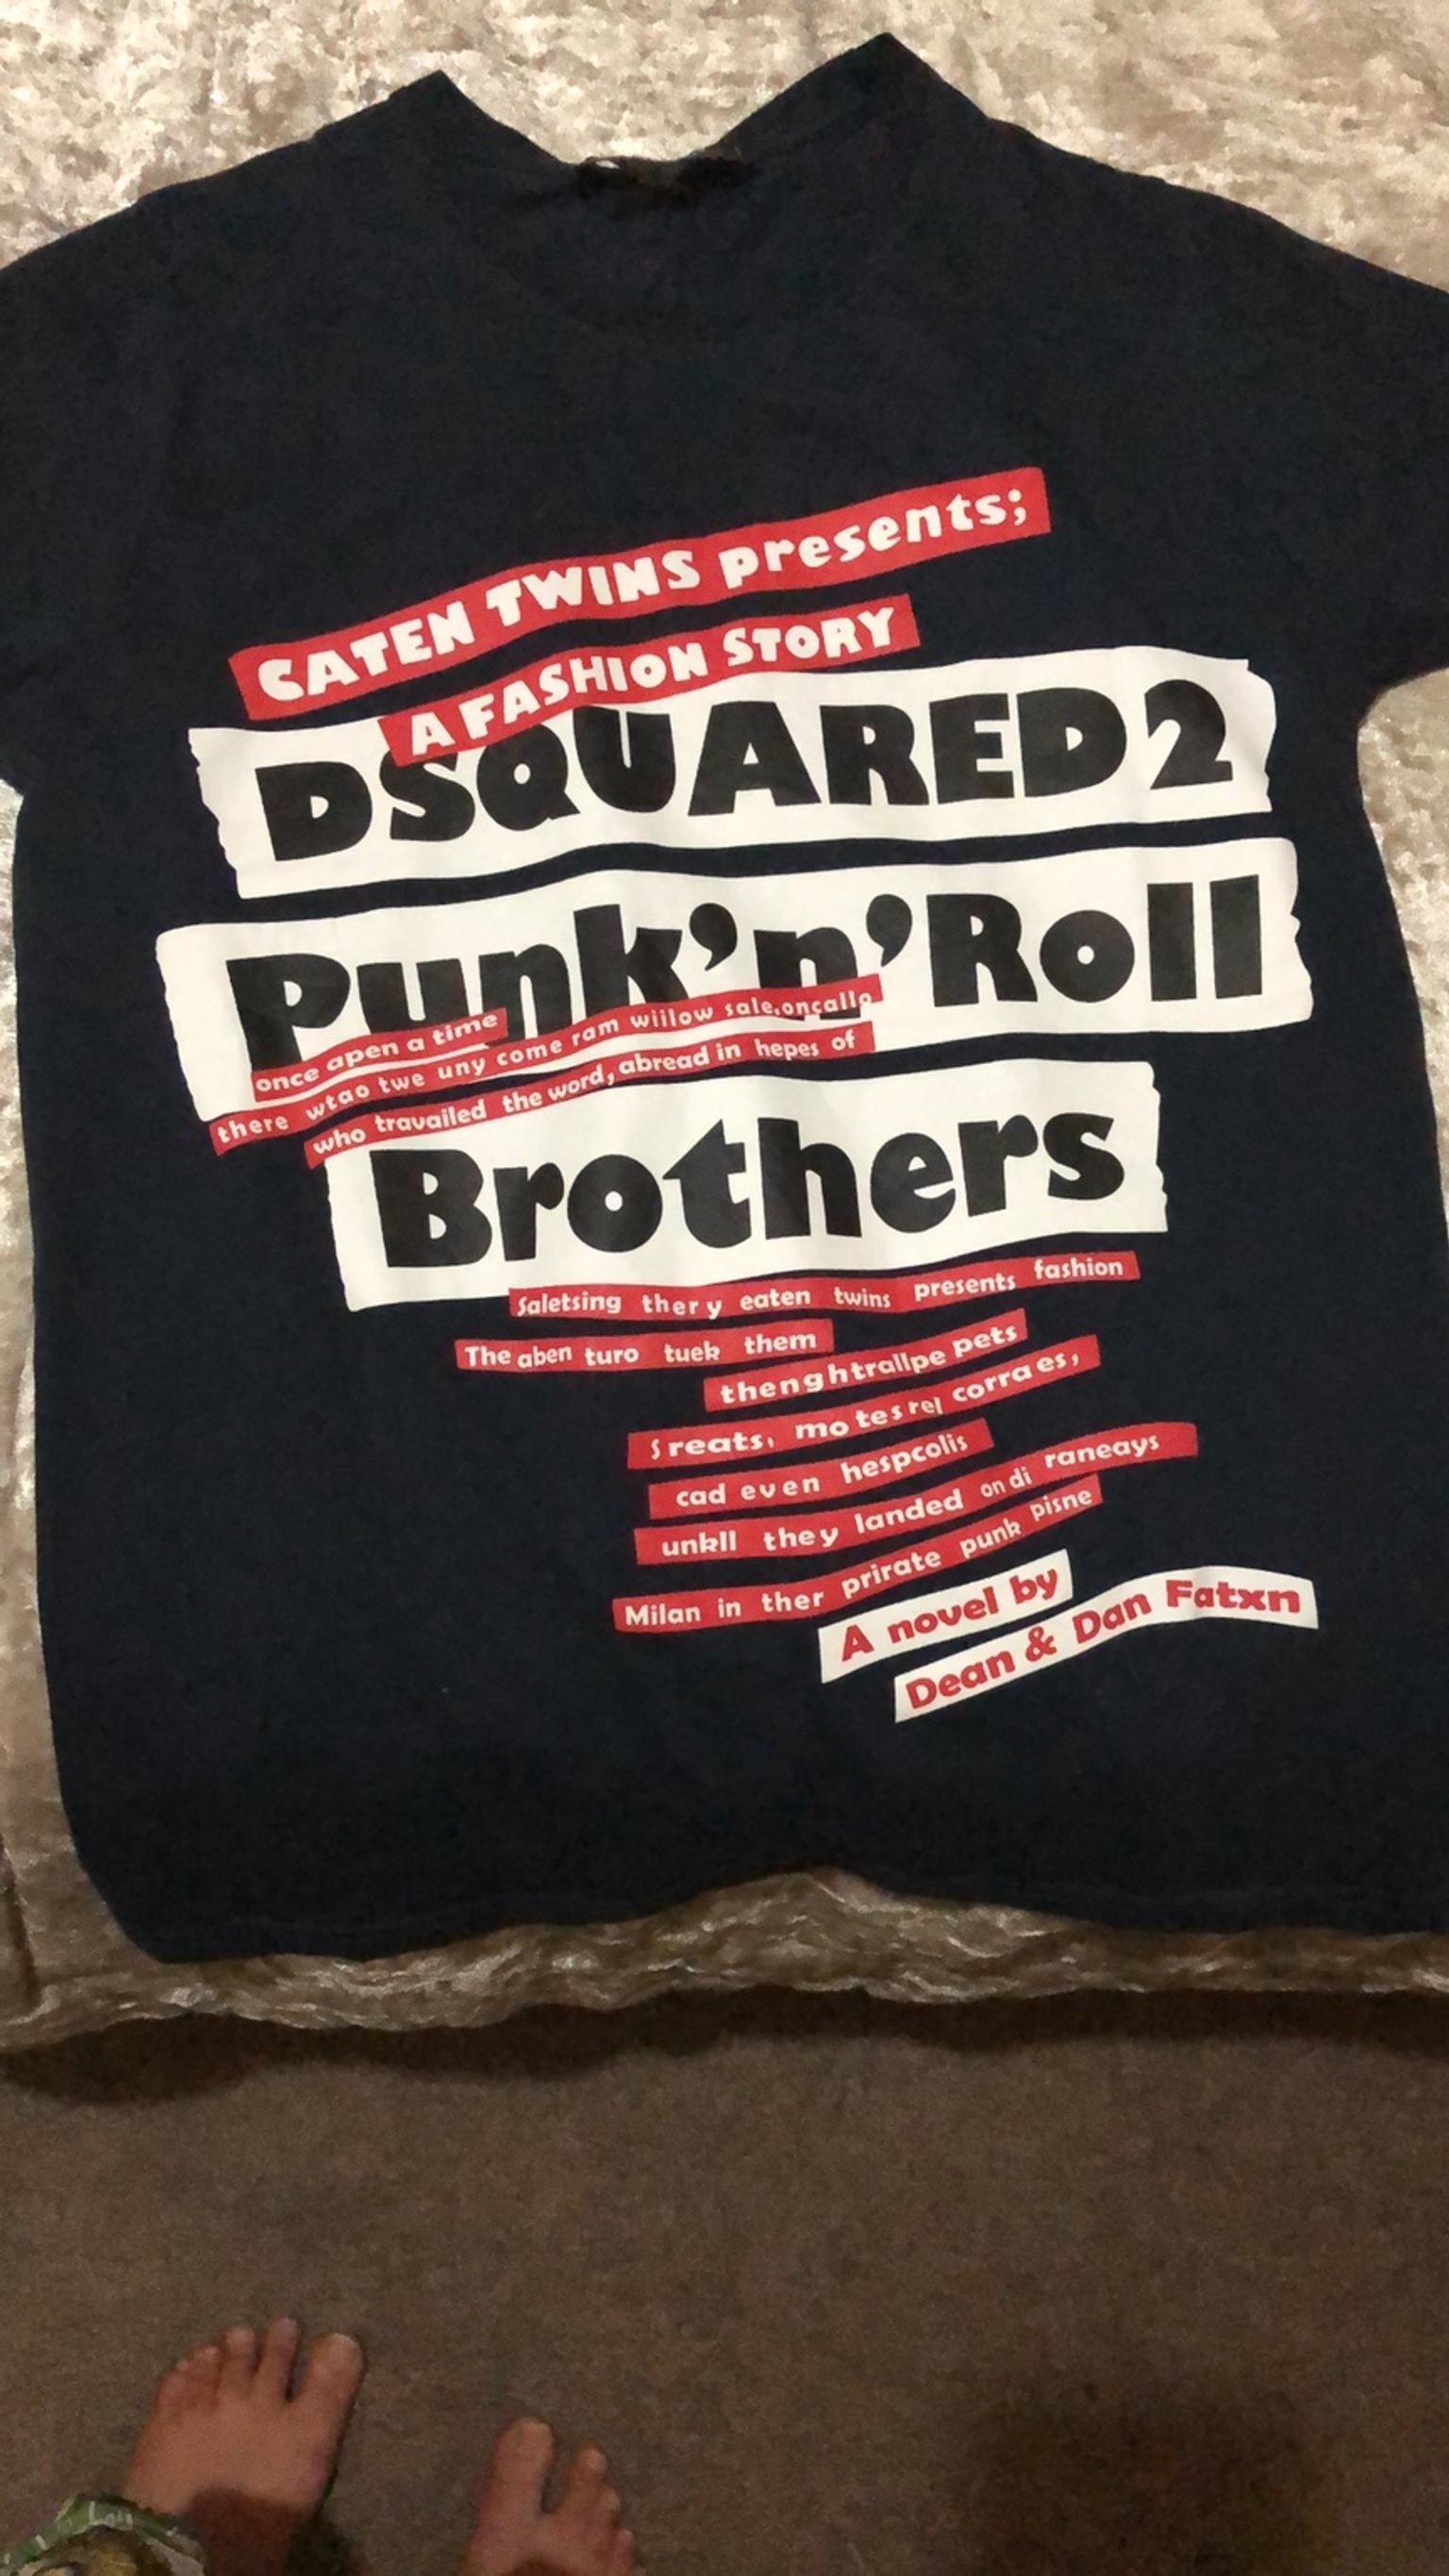 dsquared2 punk n roll t shirt